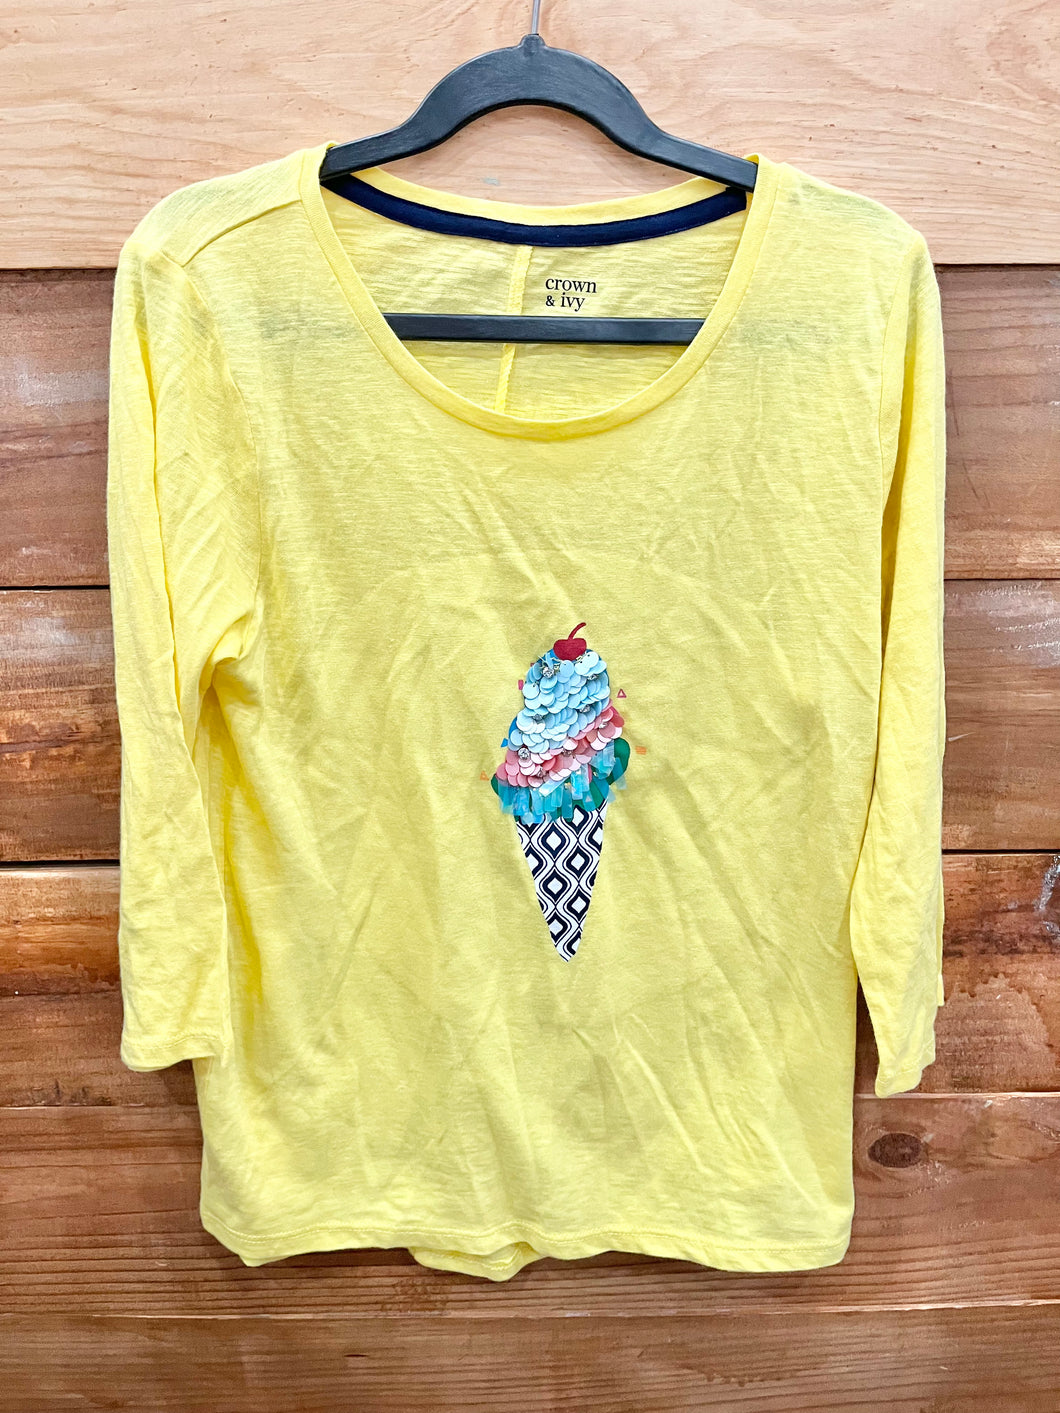 Crown & Ivy Yellow Ice Cream Shirt Size 12-14